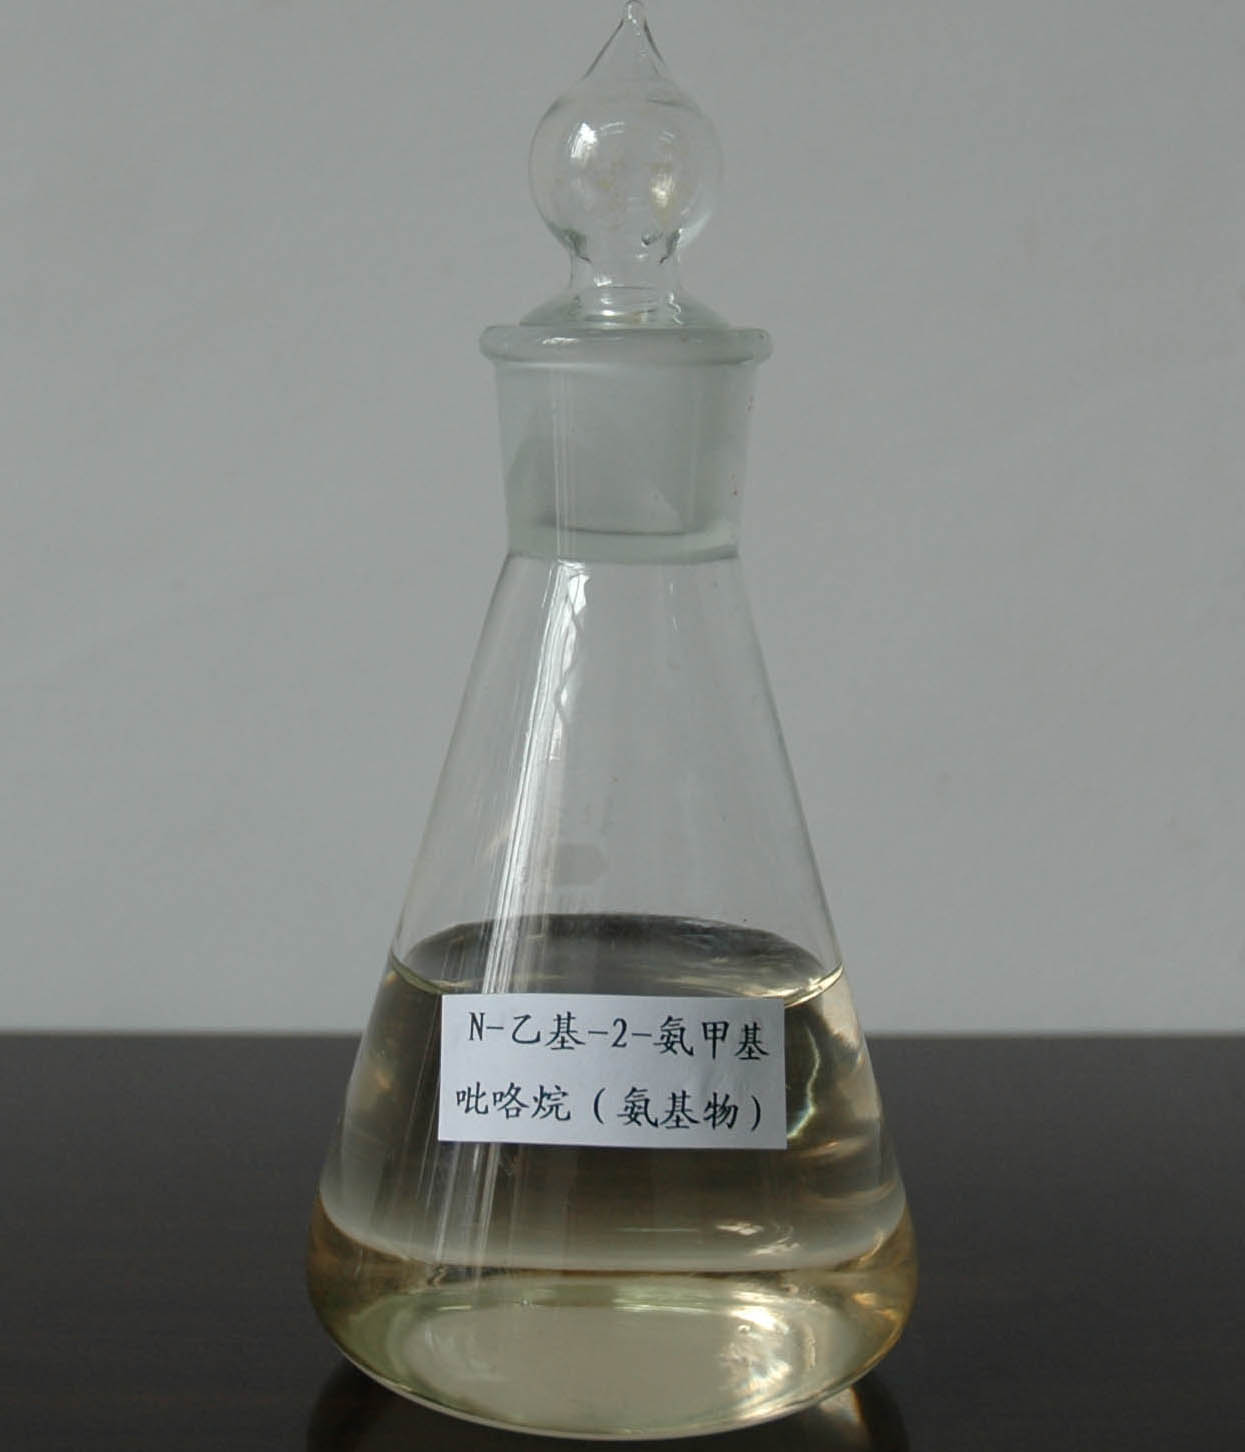  N-Ethyl-2-Aminomethyl Pirrolidine ( N-Ethyl-2-Aminomethyl Pirrolidine)